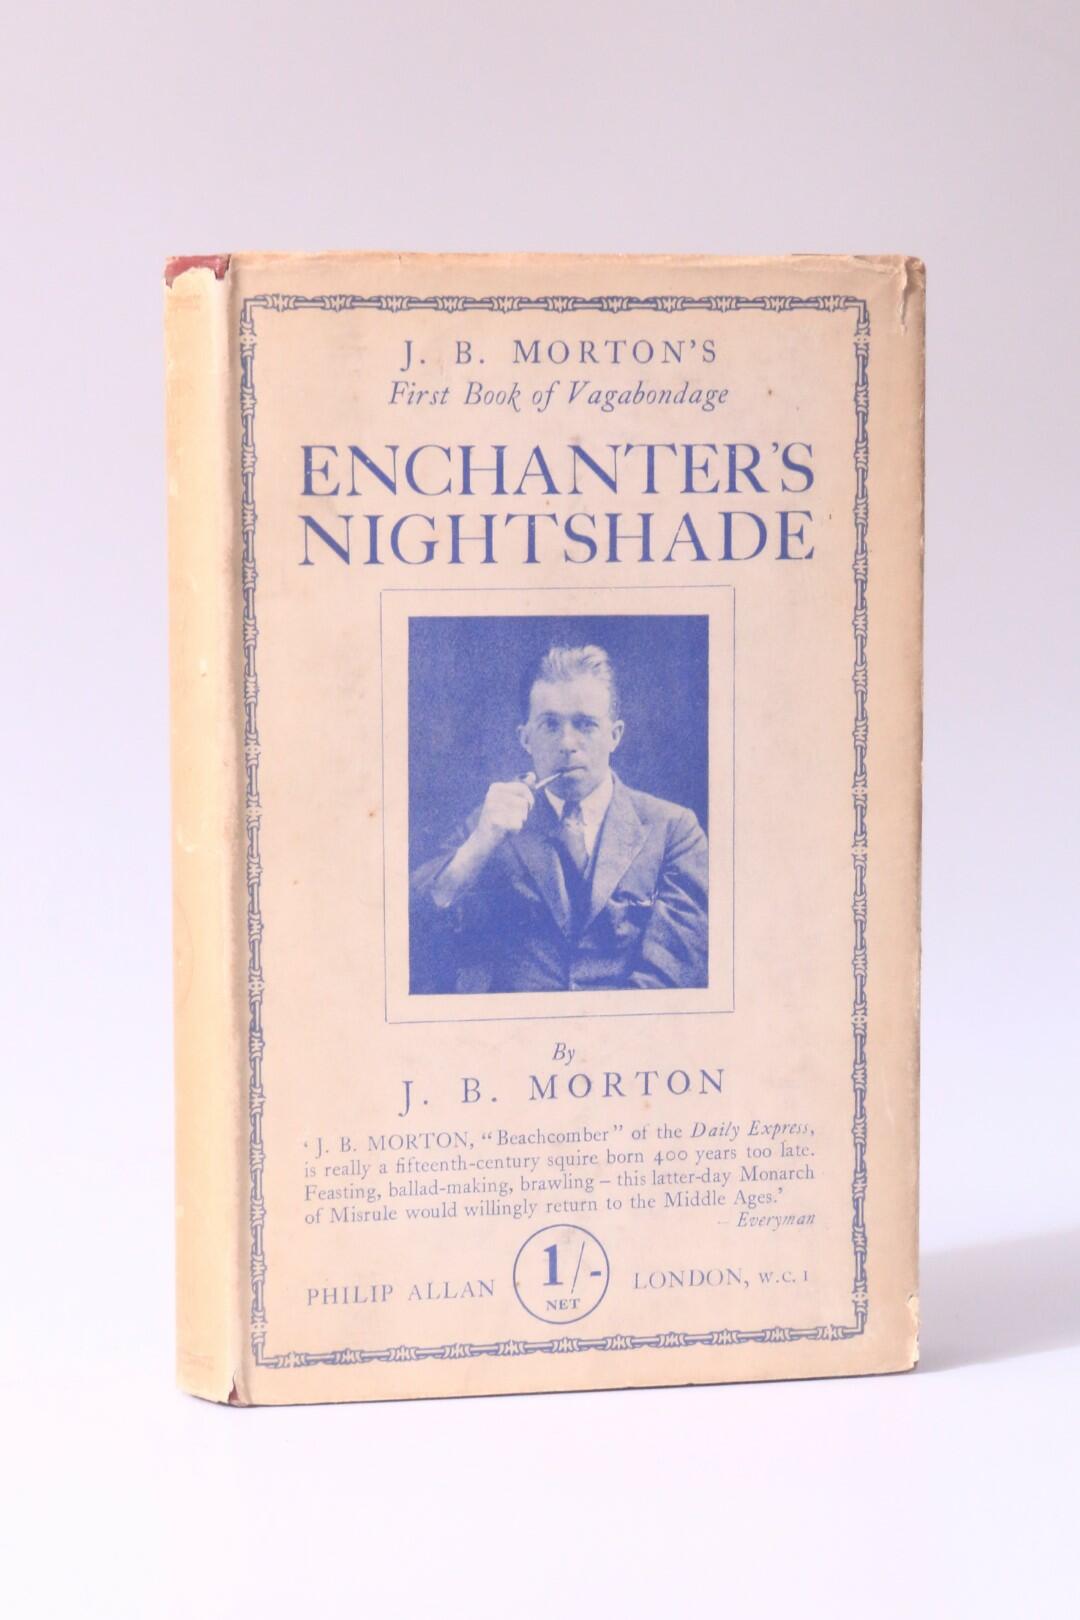 J.B. Morton - Enchanter's Nightshade - Philip Allan, 1921, First Edition.